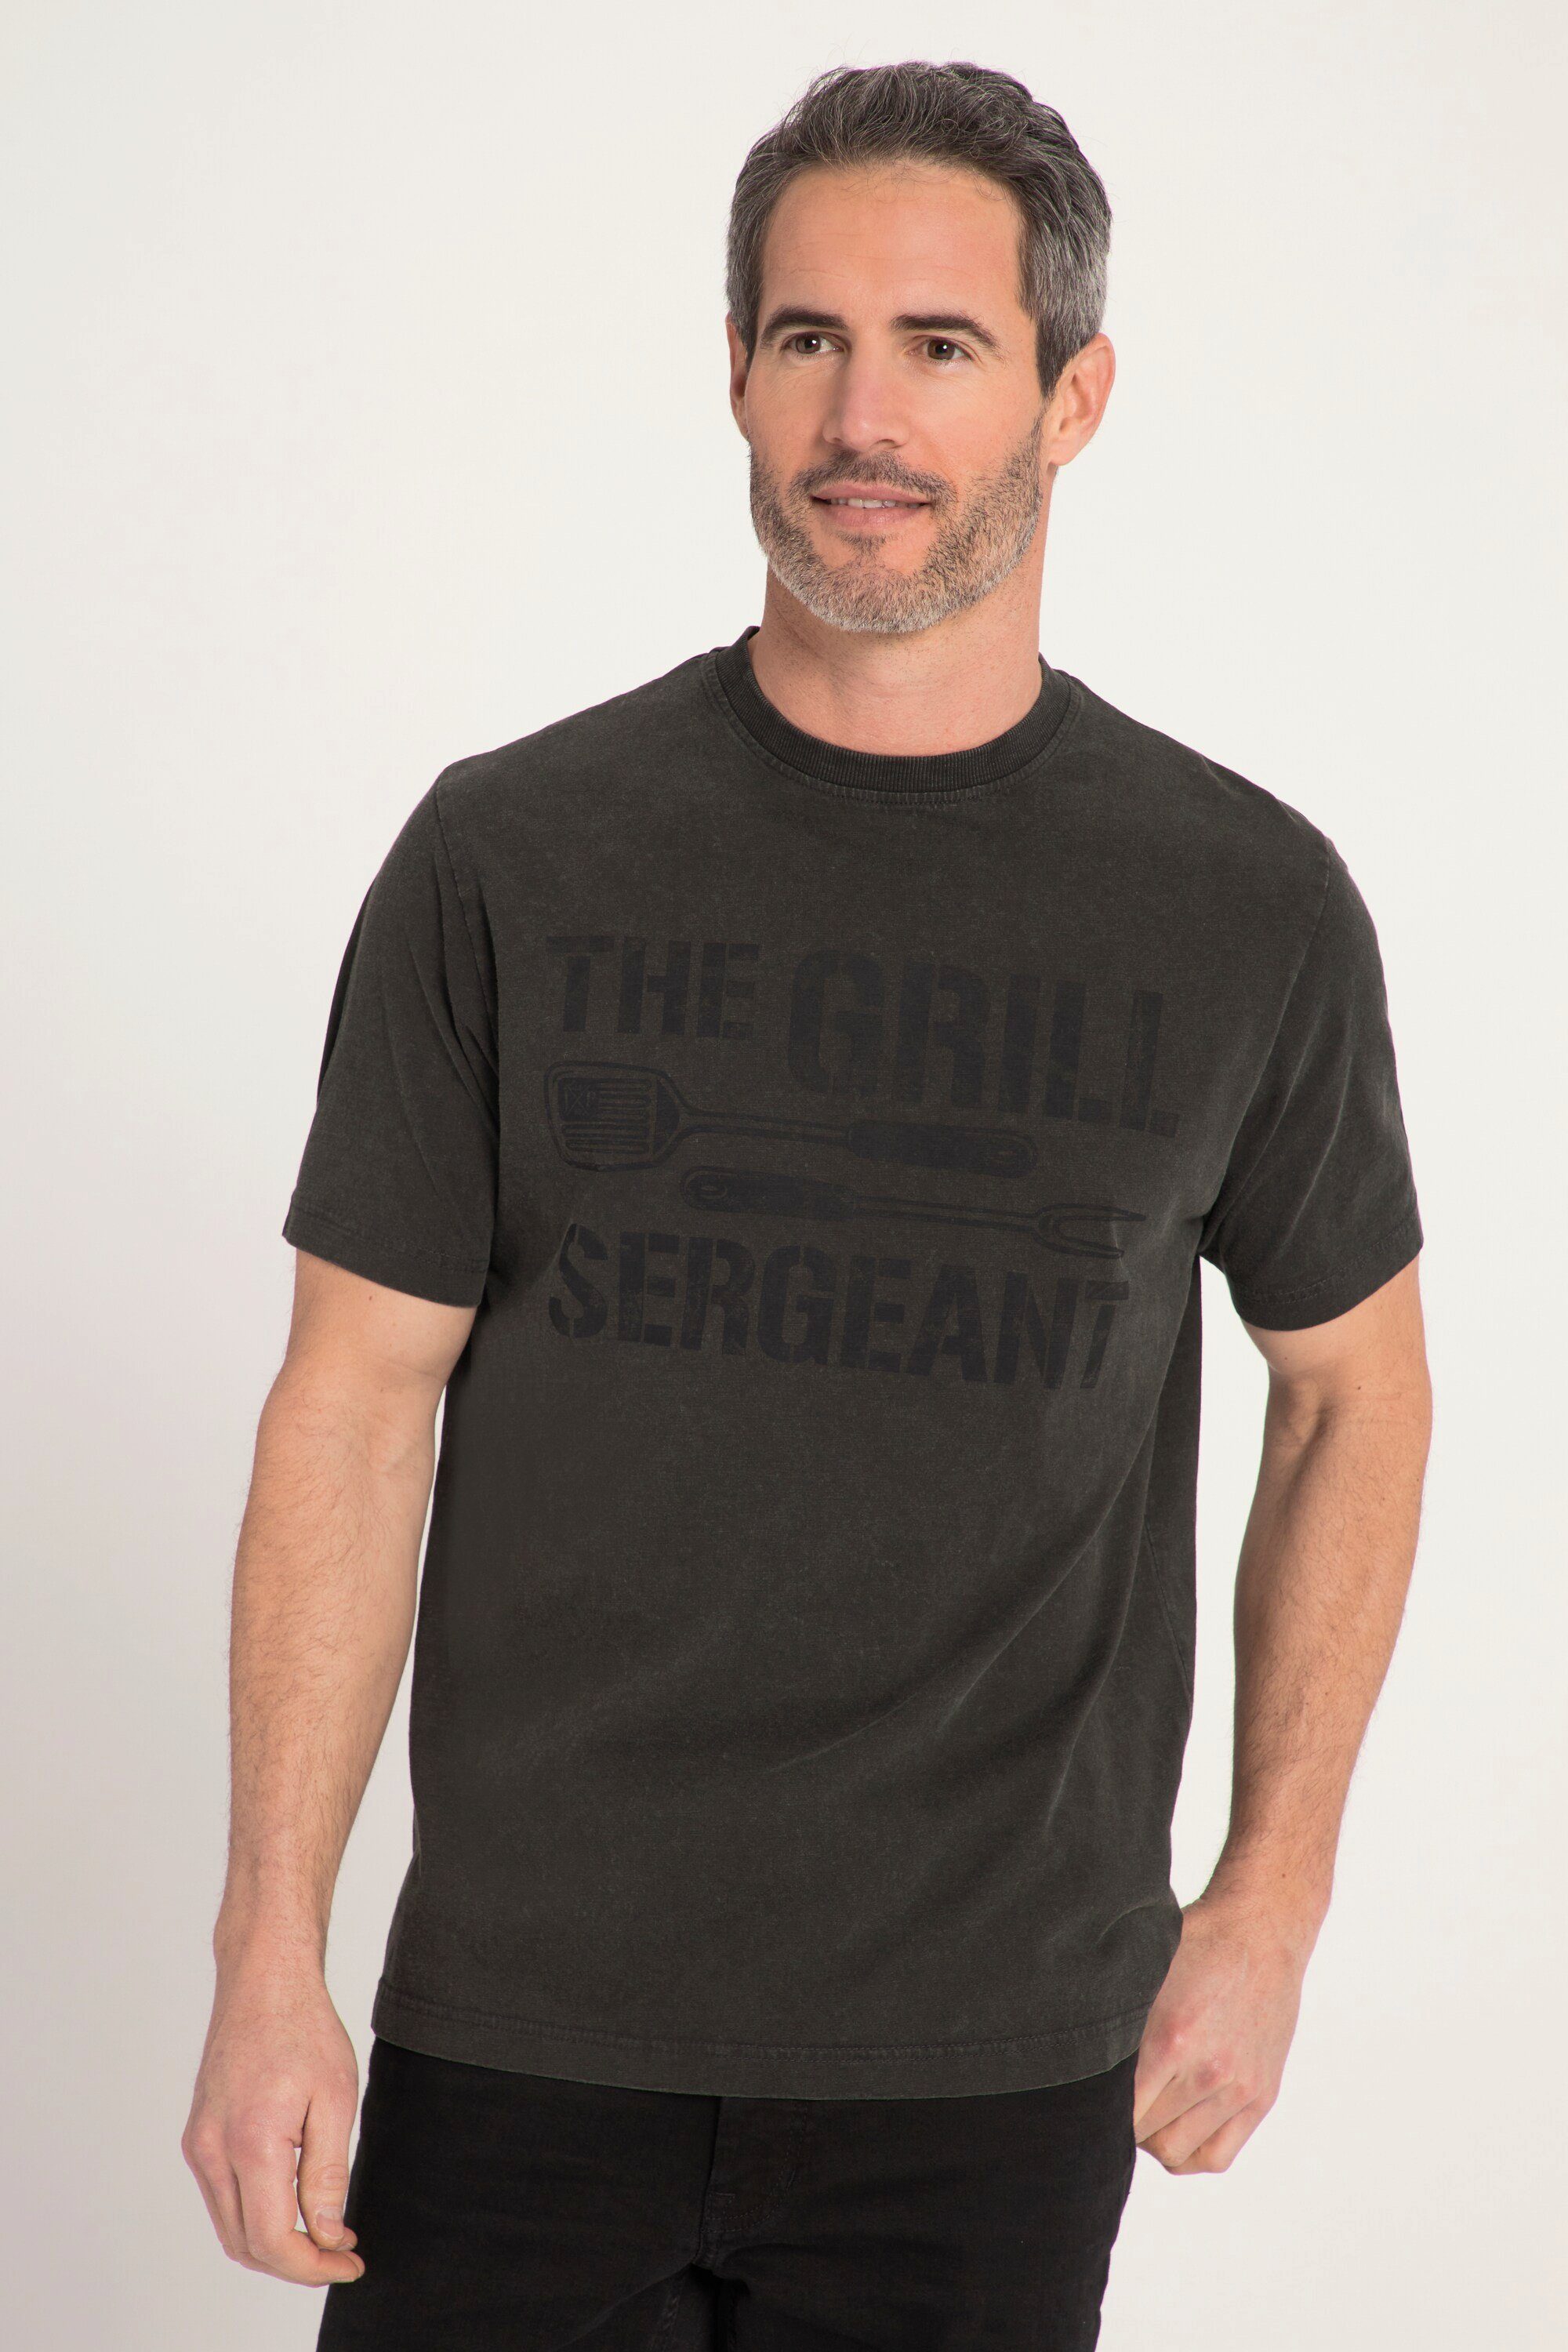 JP1880 T-Shirt T-Shirt Grill Sergeant oil dyed Halbarm bis 8 XL anthrazit | T-Shirts